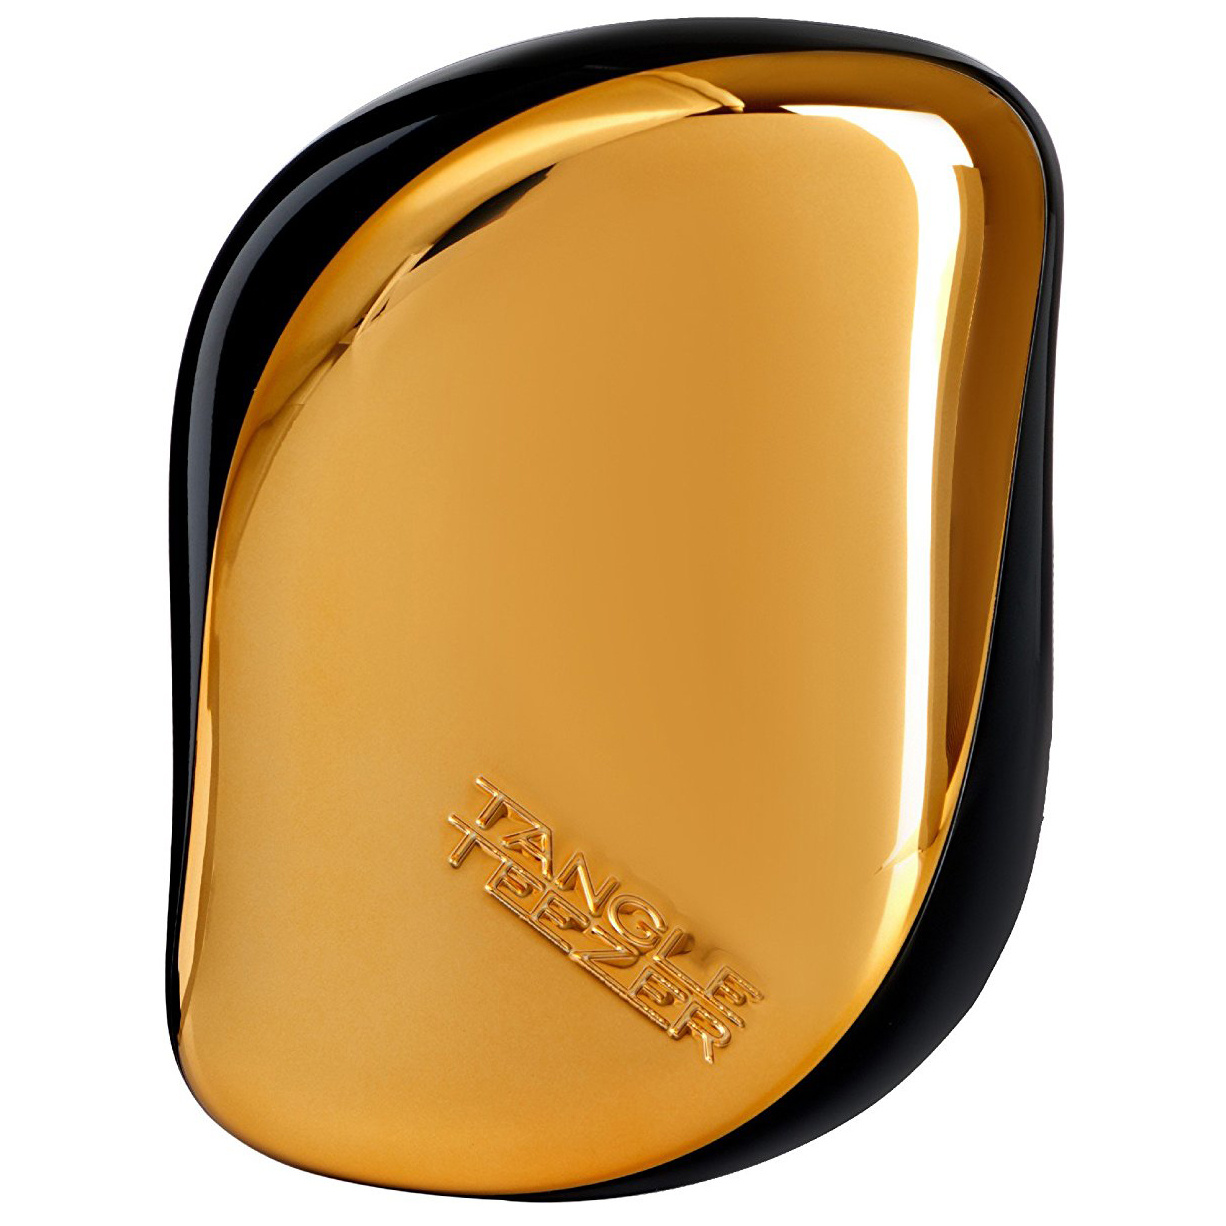 Расческа Tangle Teezer Compact Styler Bronze Chrome tangle teezer расческа pink matte chrome